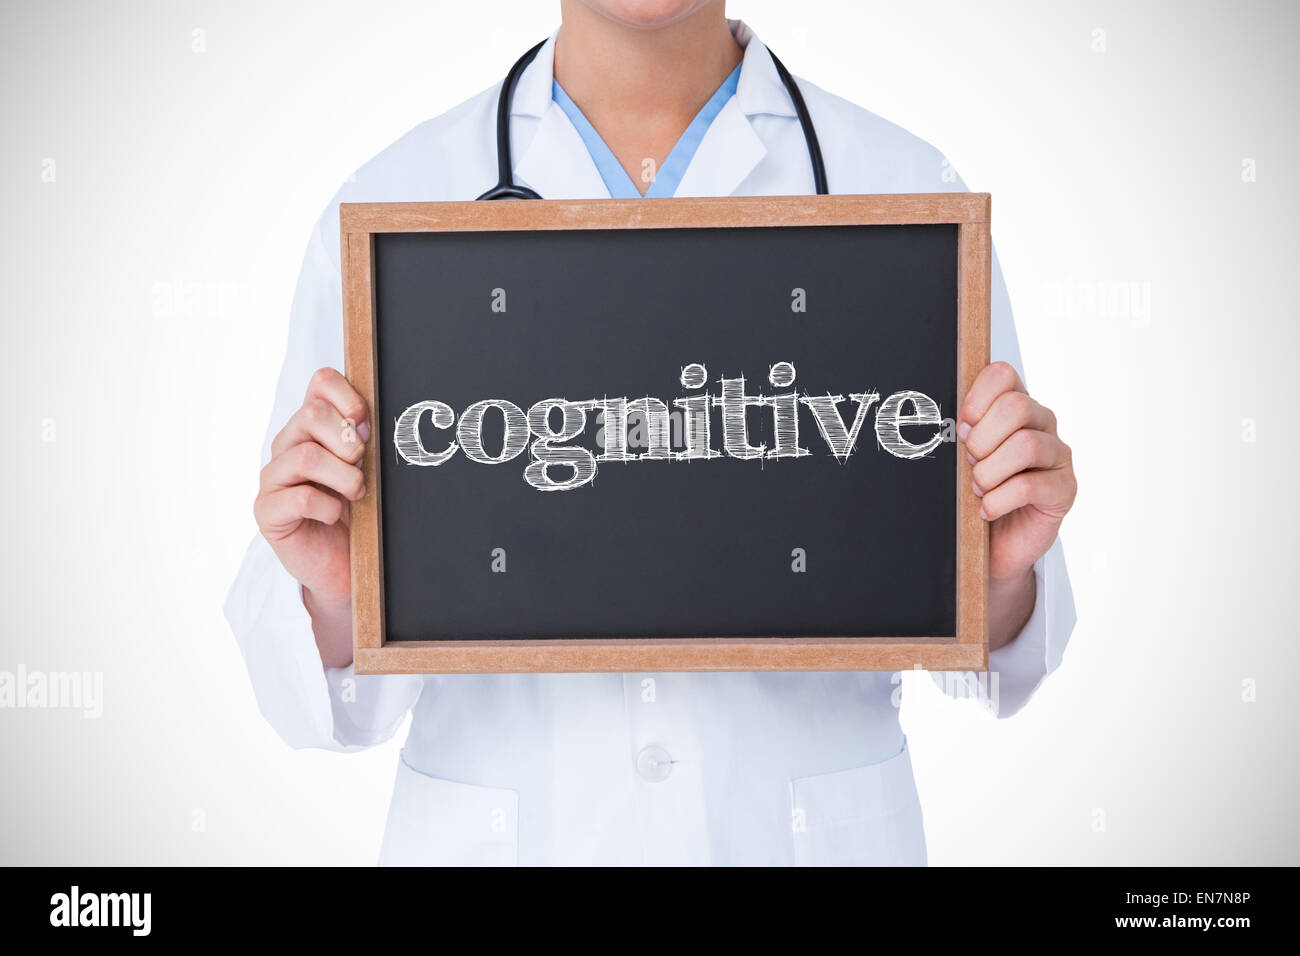 Cognitive against doctor showing little blackboard Stock Photo